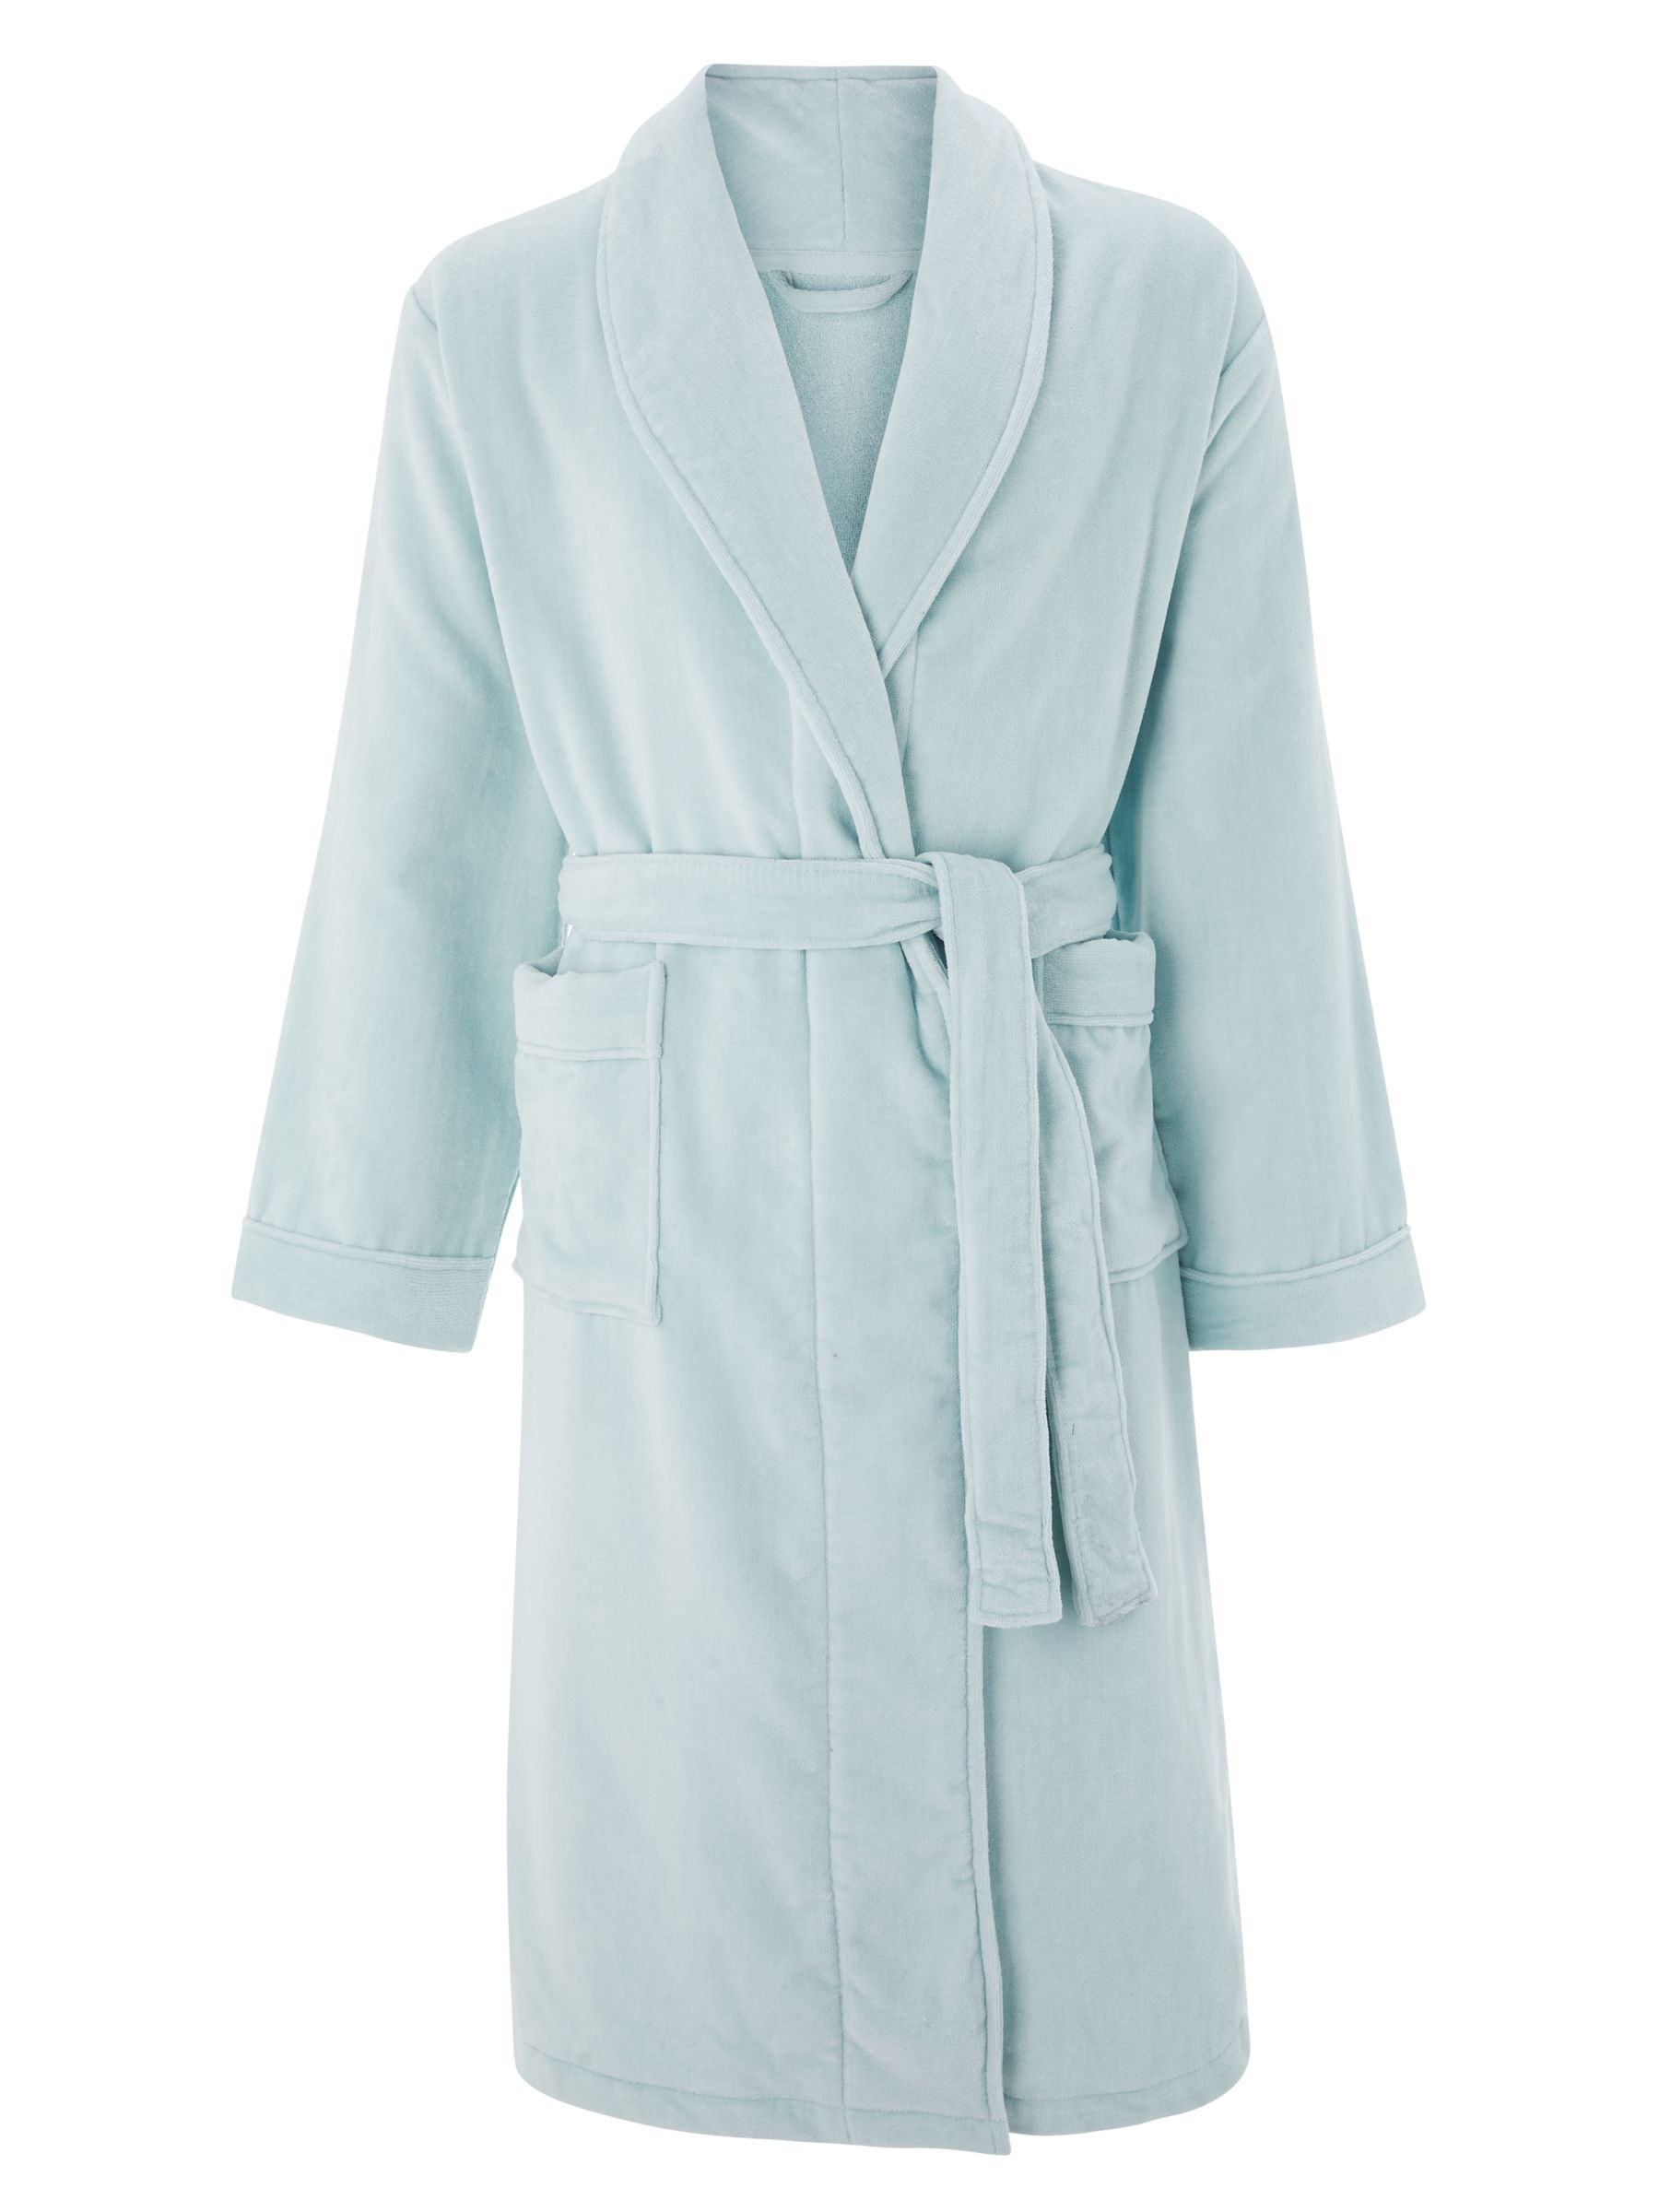 John Lewis & Partners Velour Luxury Cotton Unisex Bath Robe